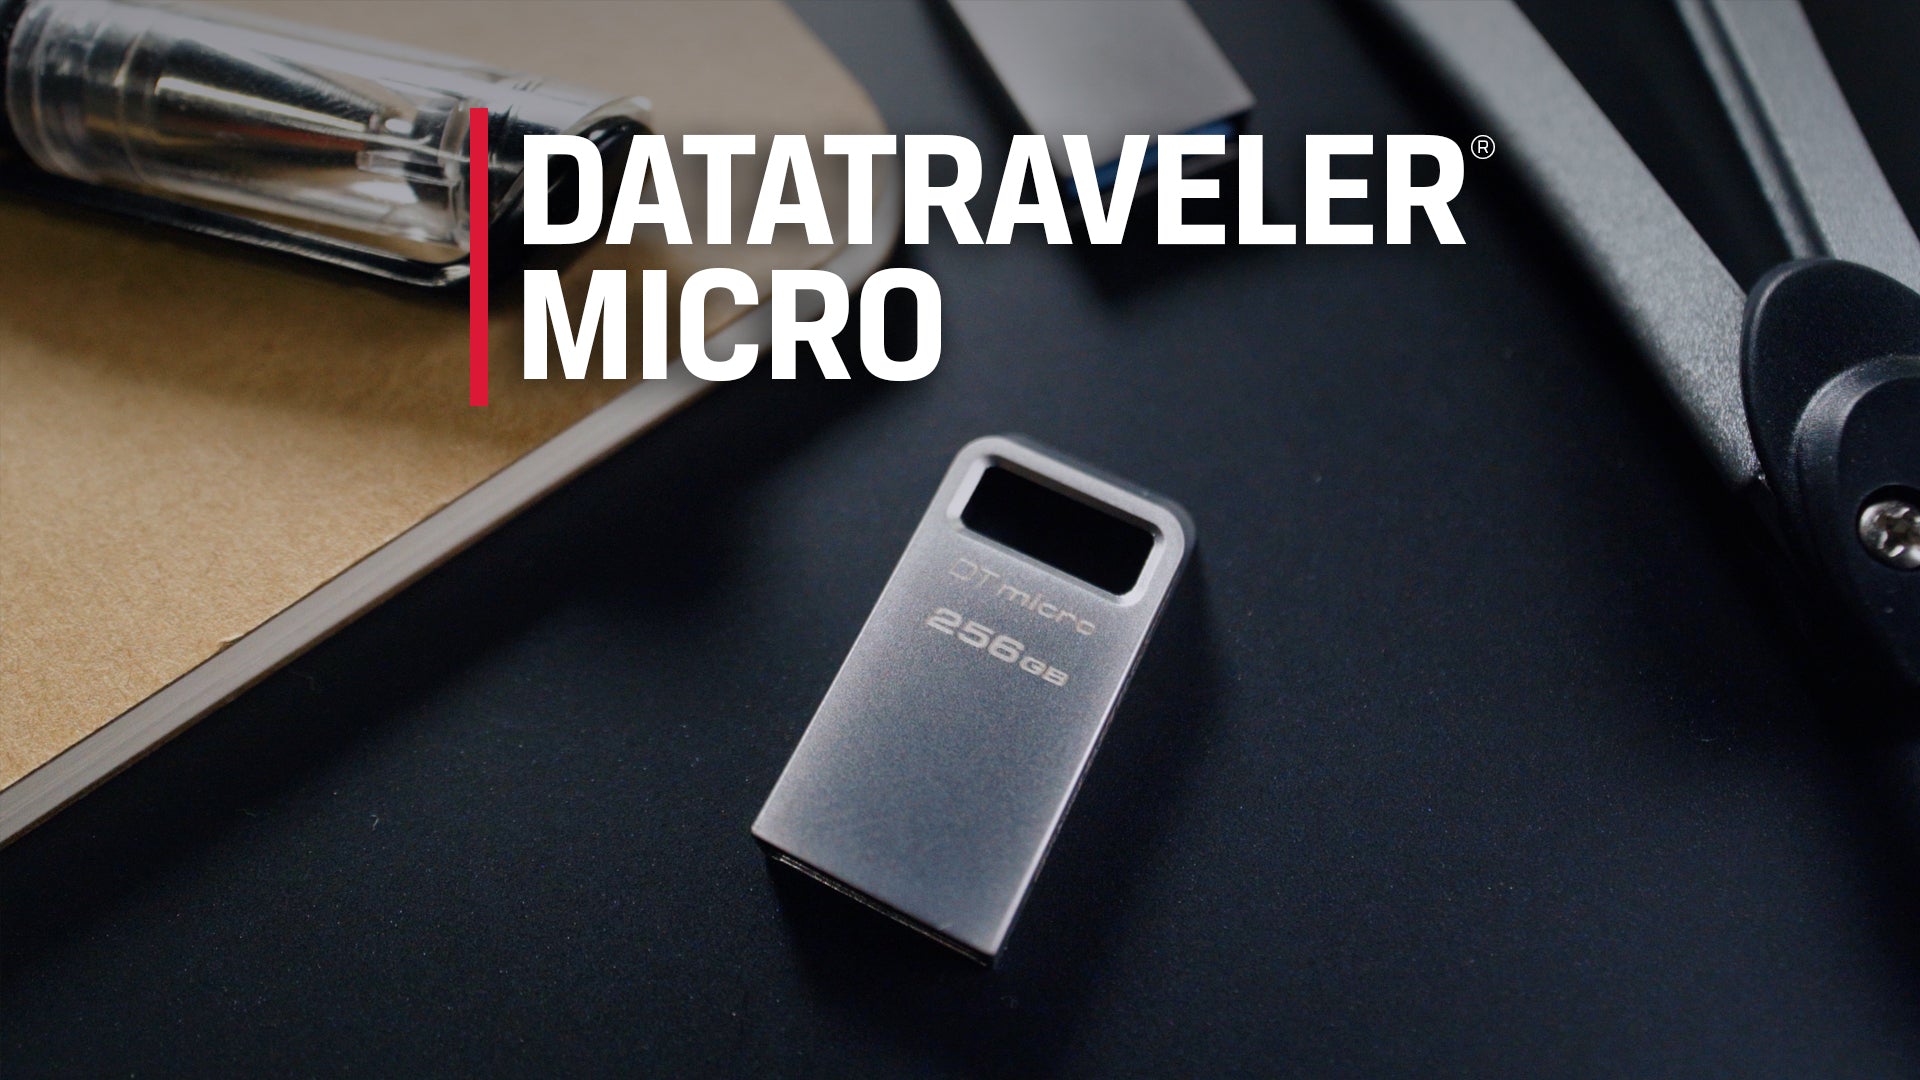 DataTraveler Micro 3.2 USB Flash Drive